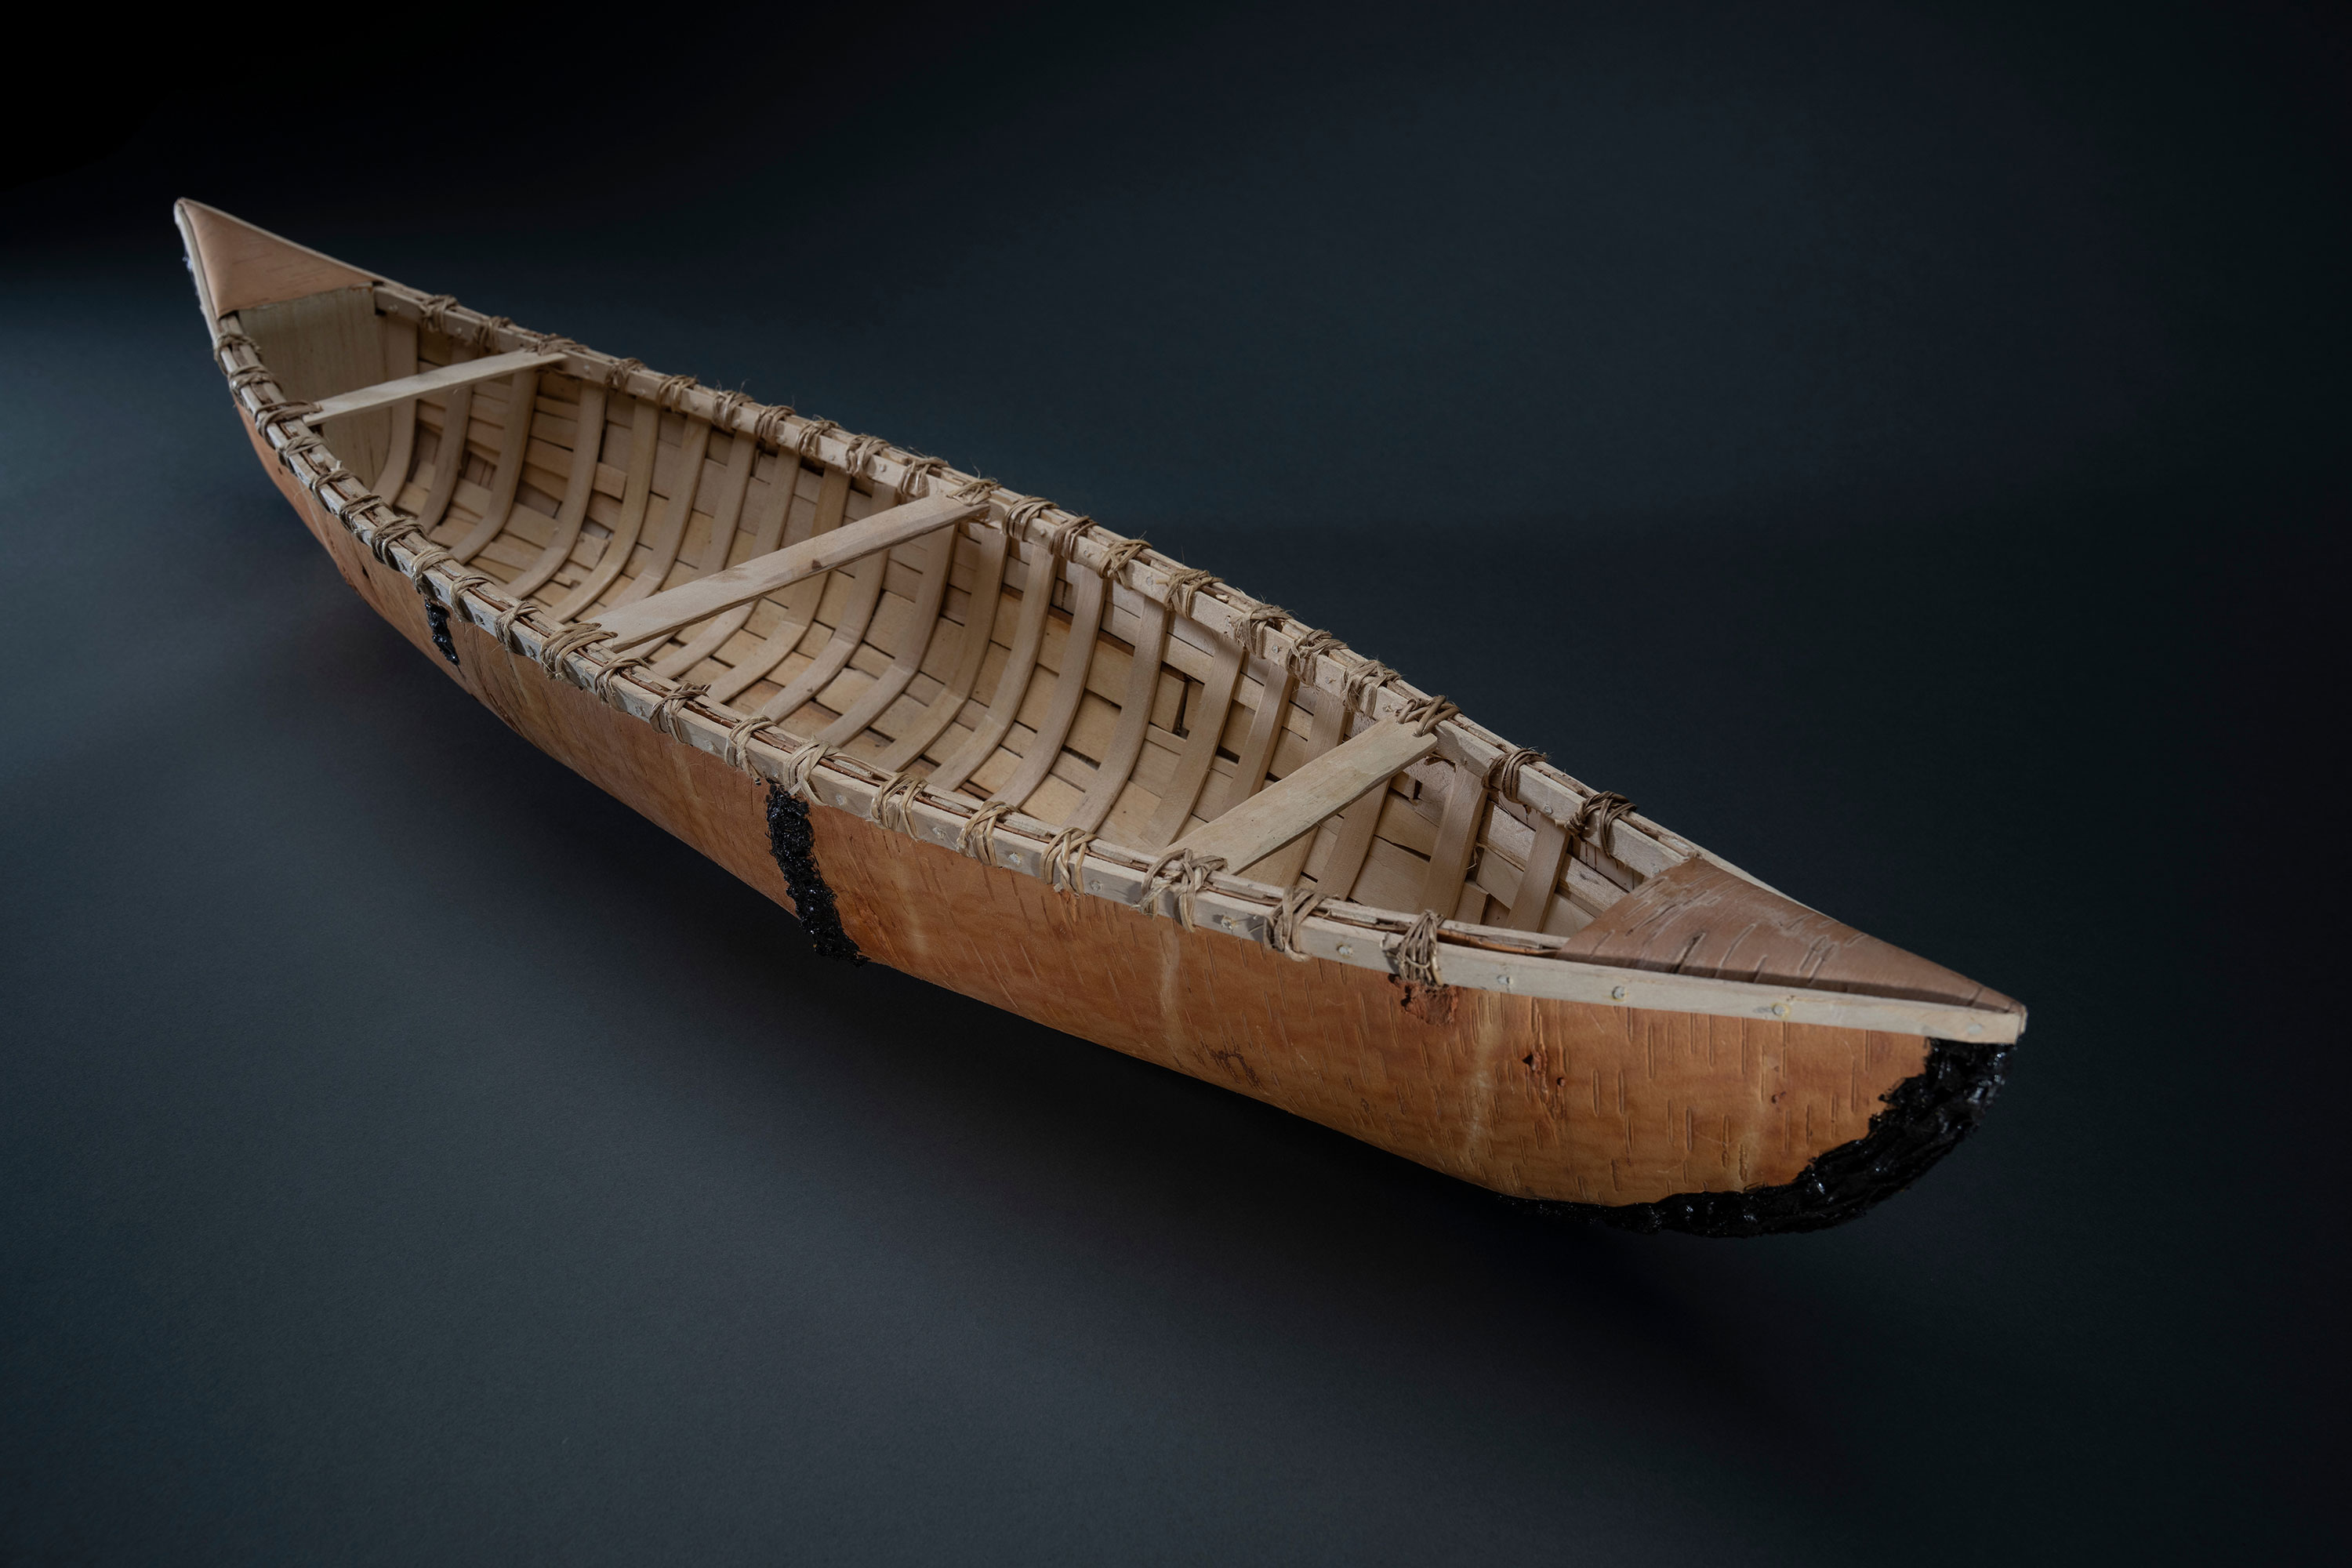 A wooden canoe